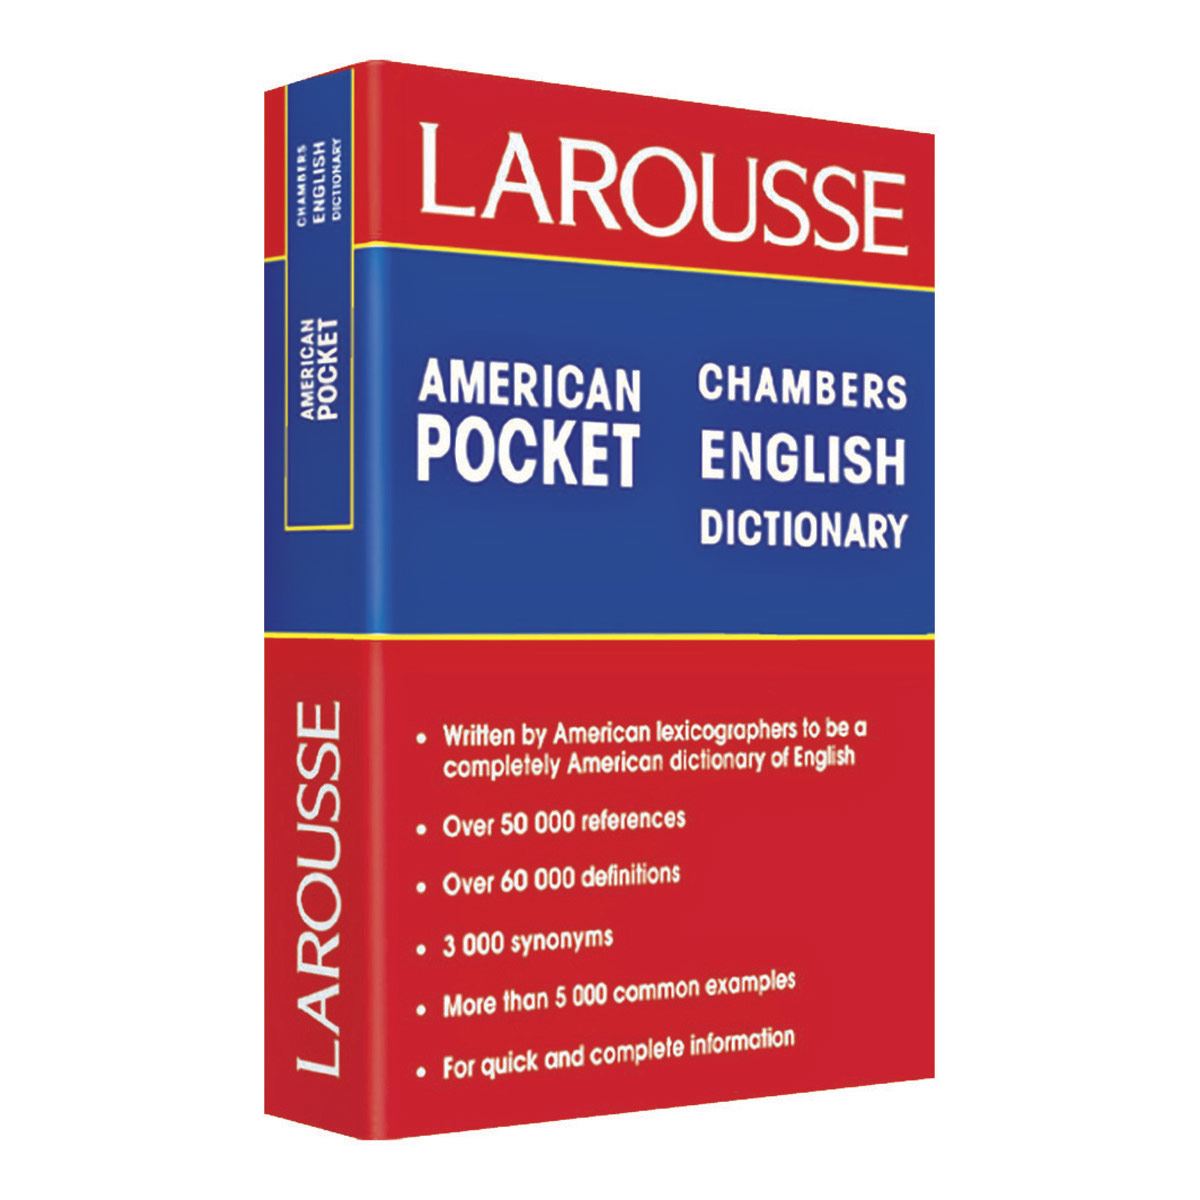 American Pocket Chamber's English Dictionary